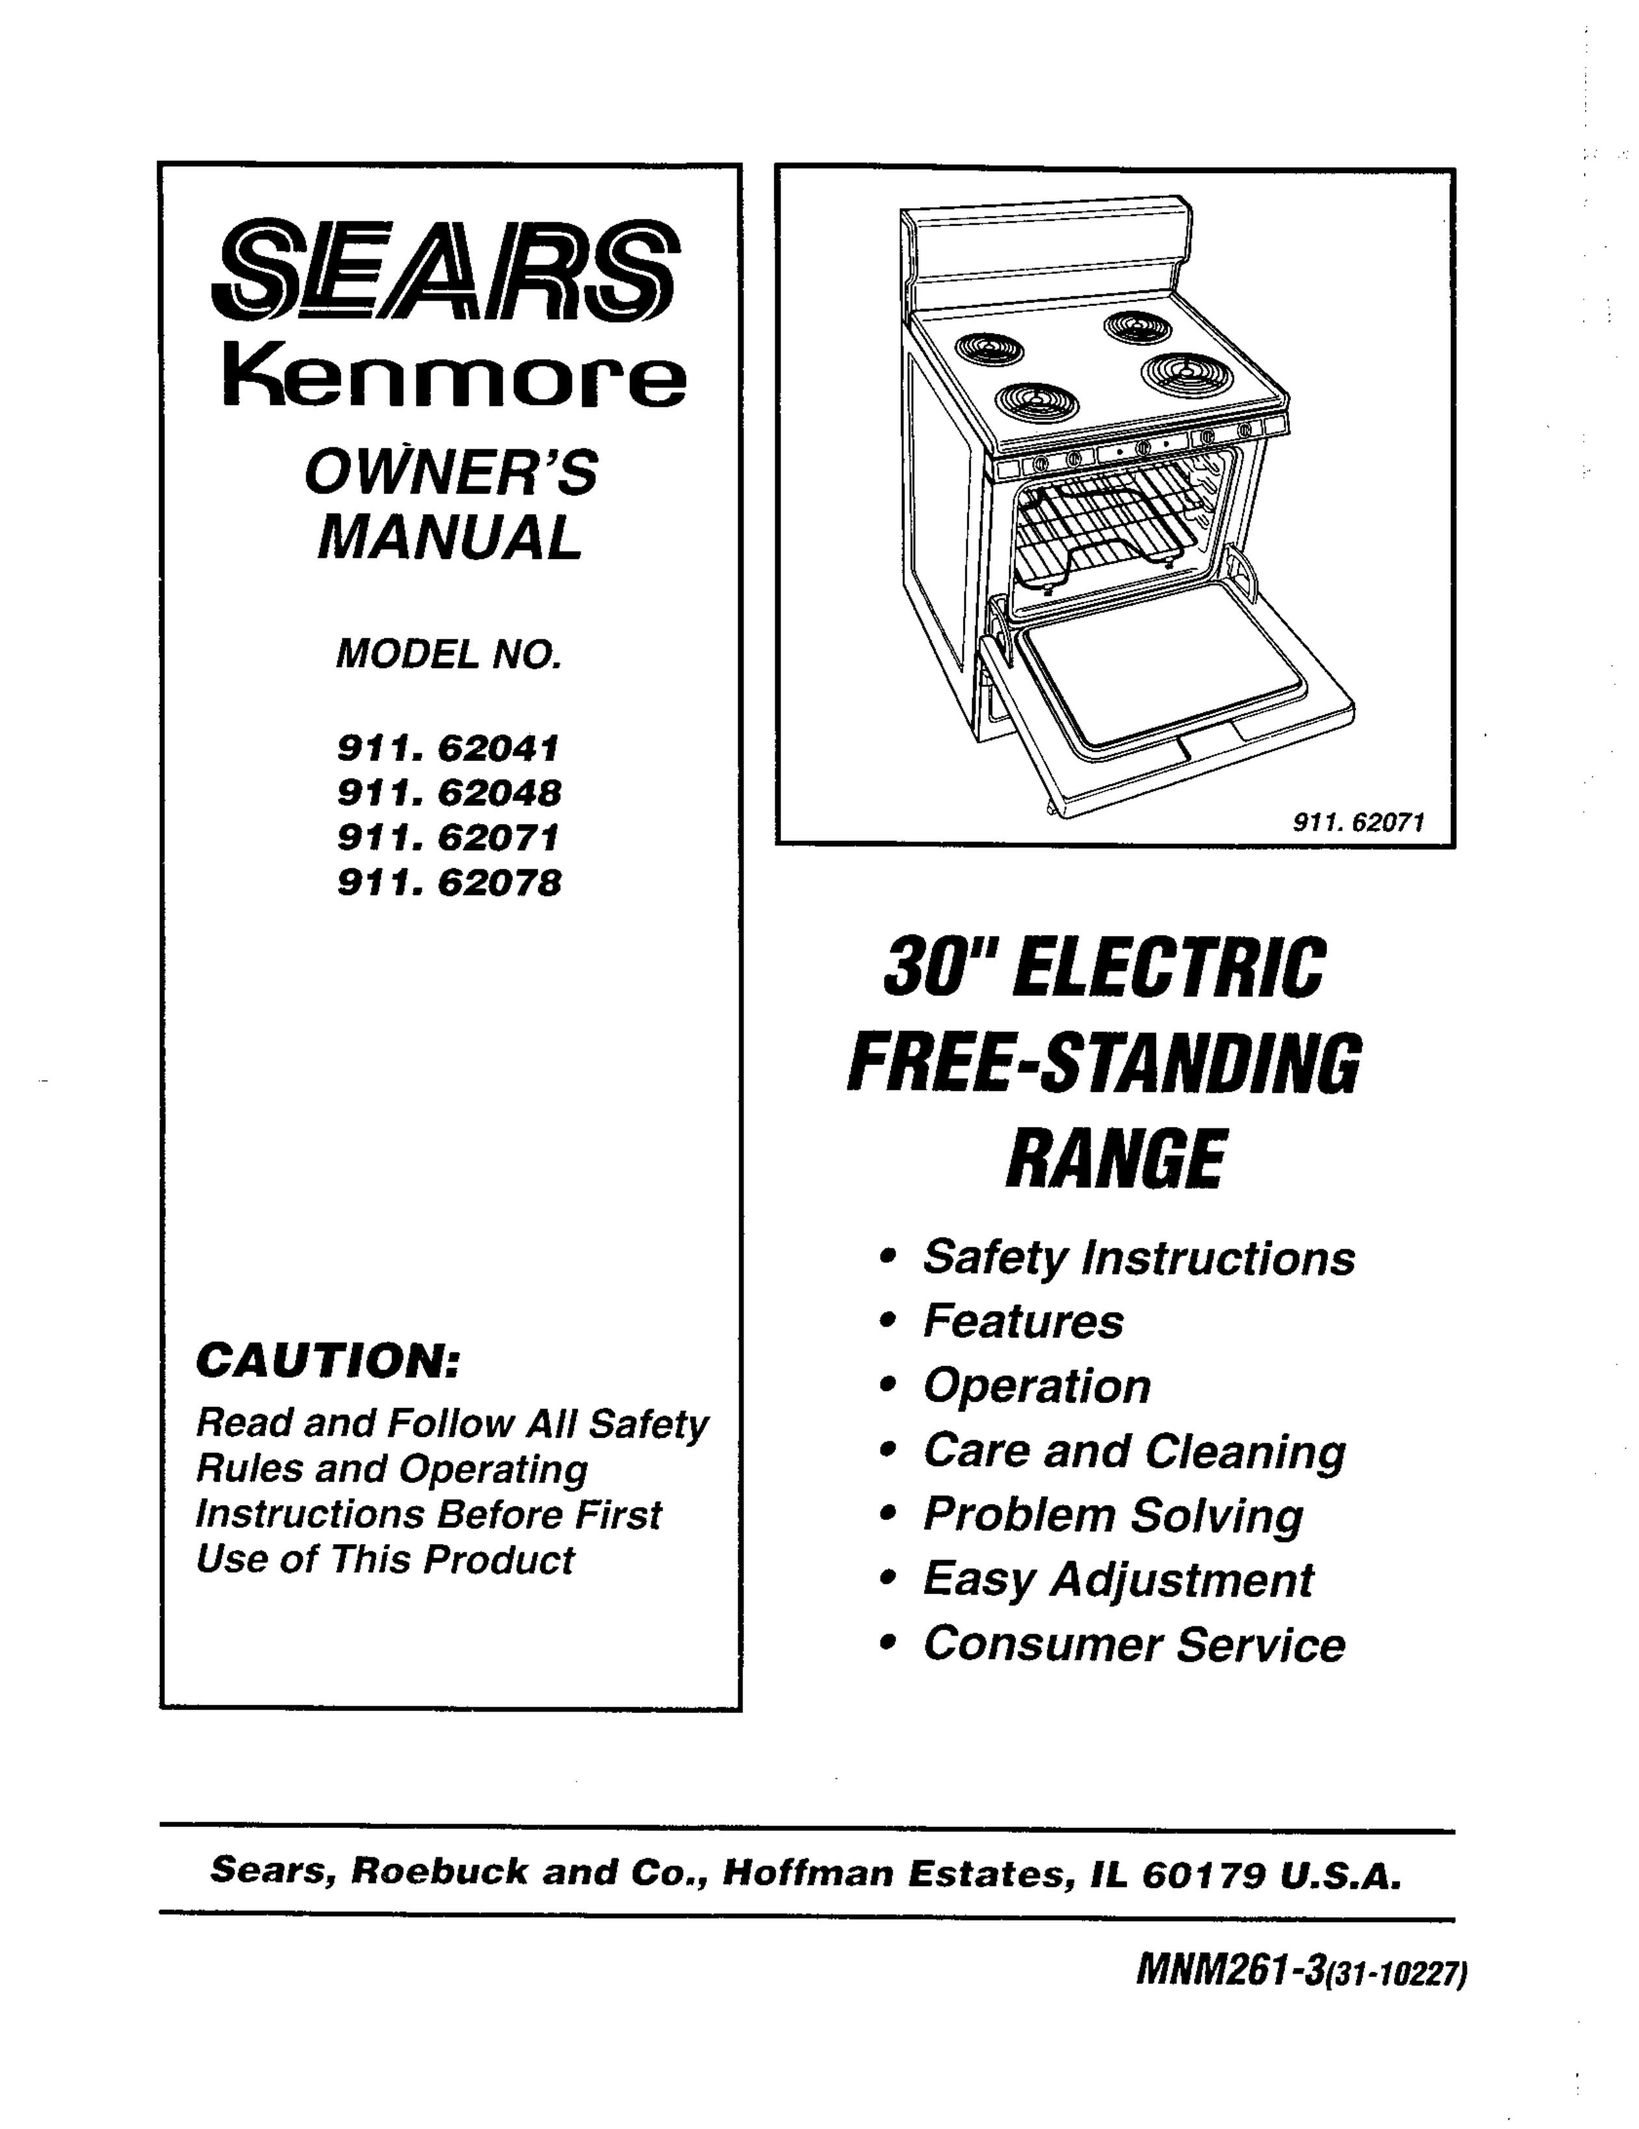 Sears 911. 62048 Oven User Manual